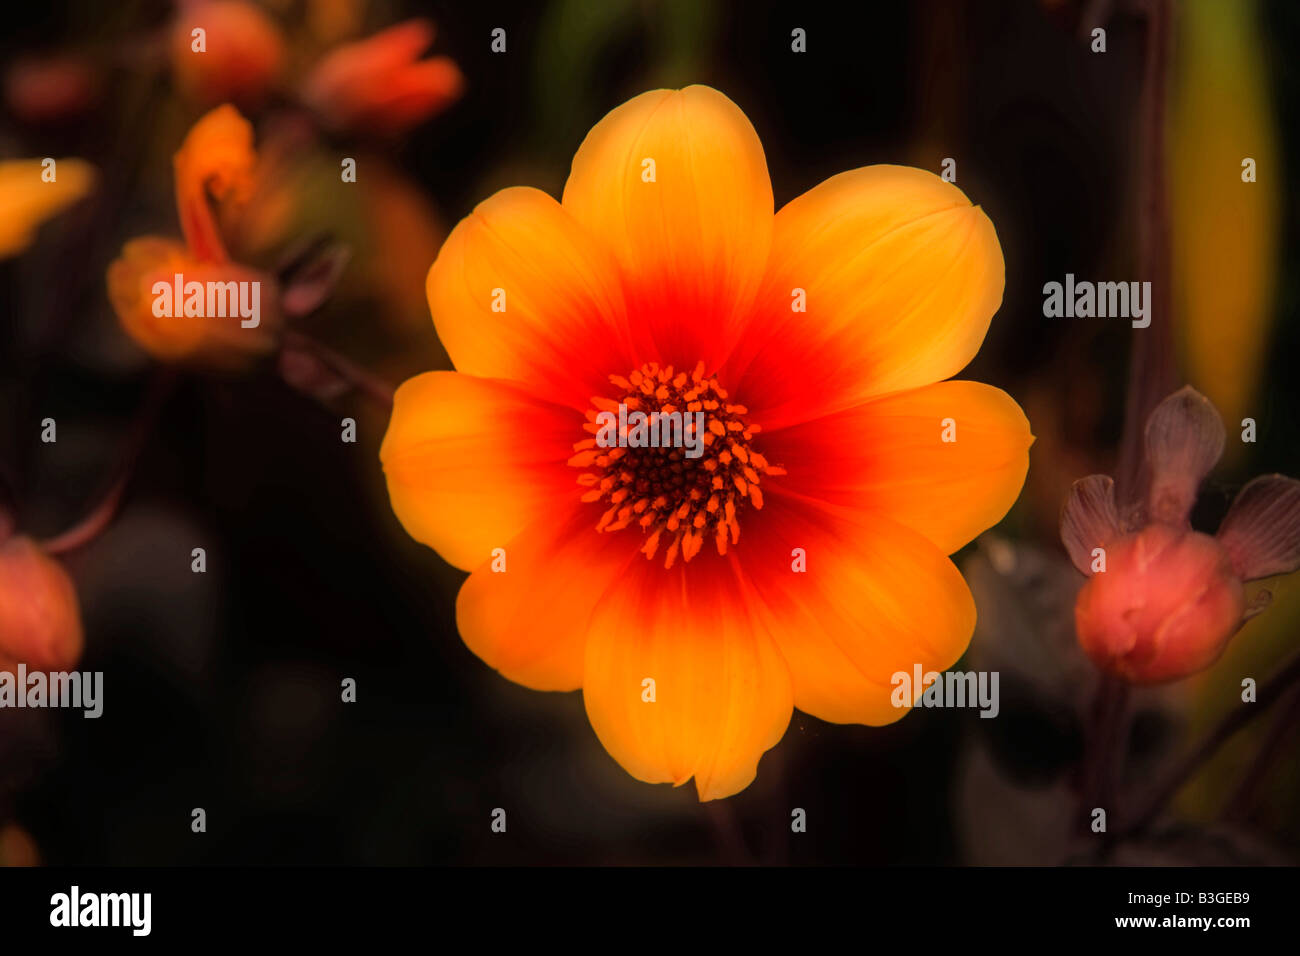 Orange flower, blurred effect Stock Photo